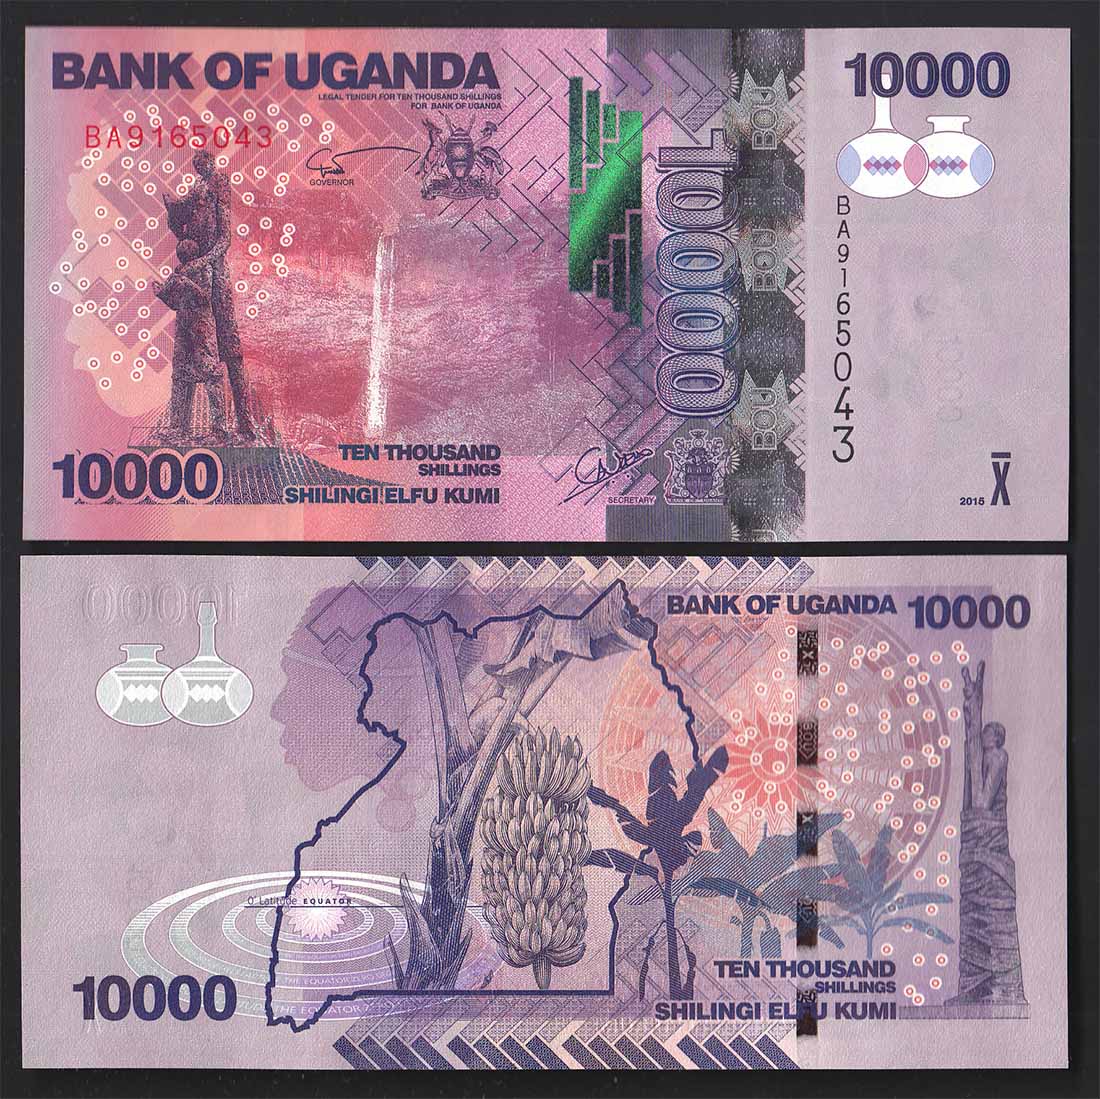 UGANDA 10.000 Shillings 2015 Fds